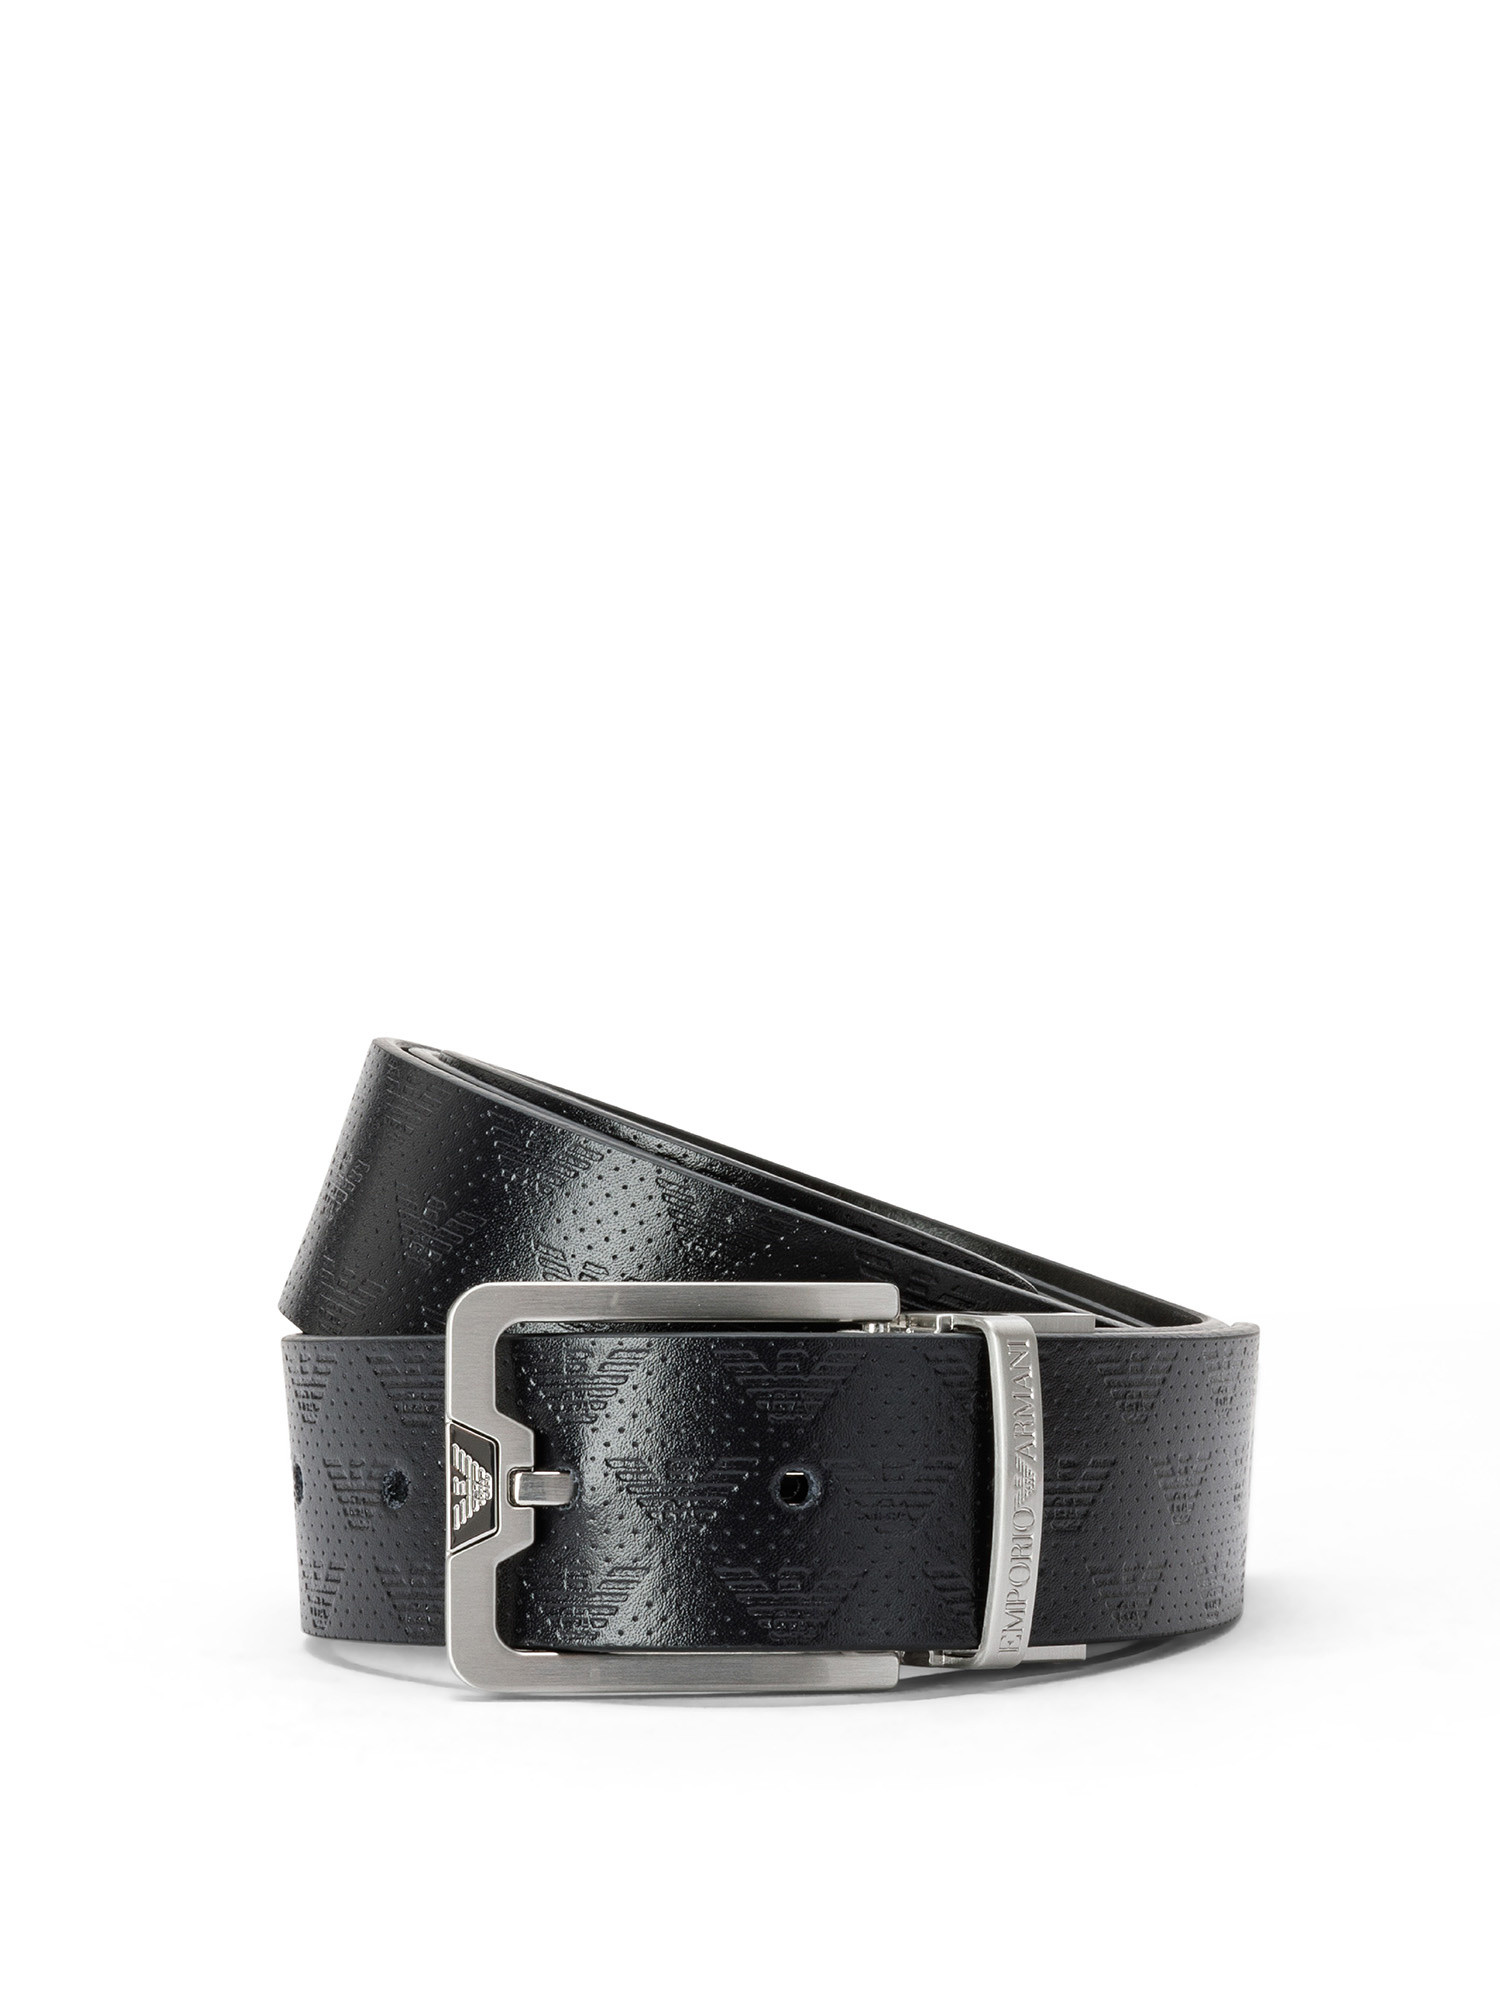 Emporio Armani - Leather belt with logo, Black, large image number 0